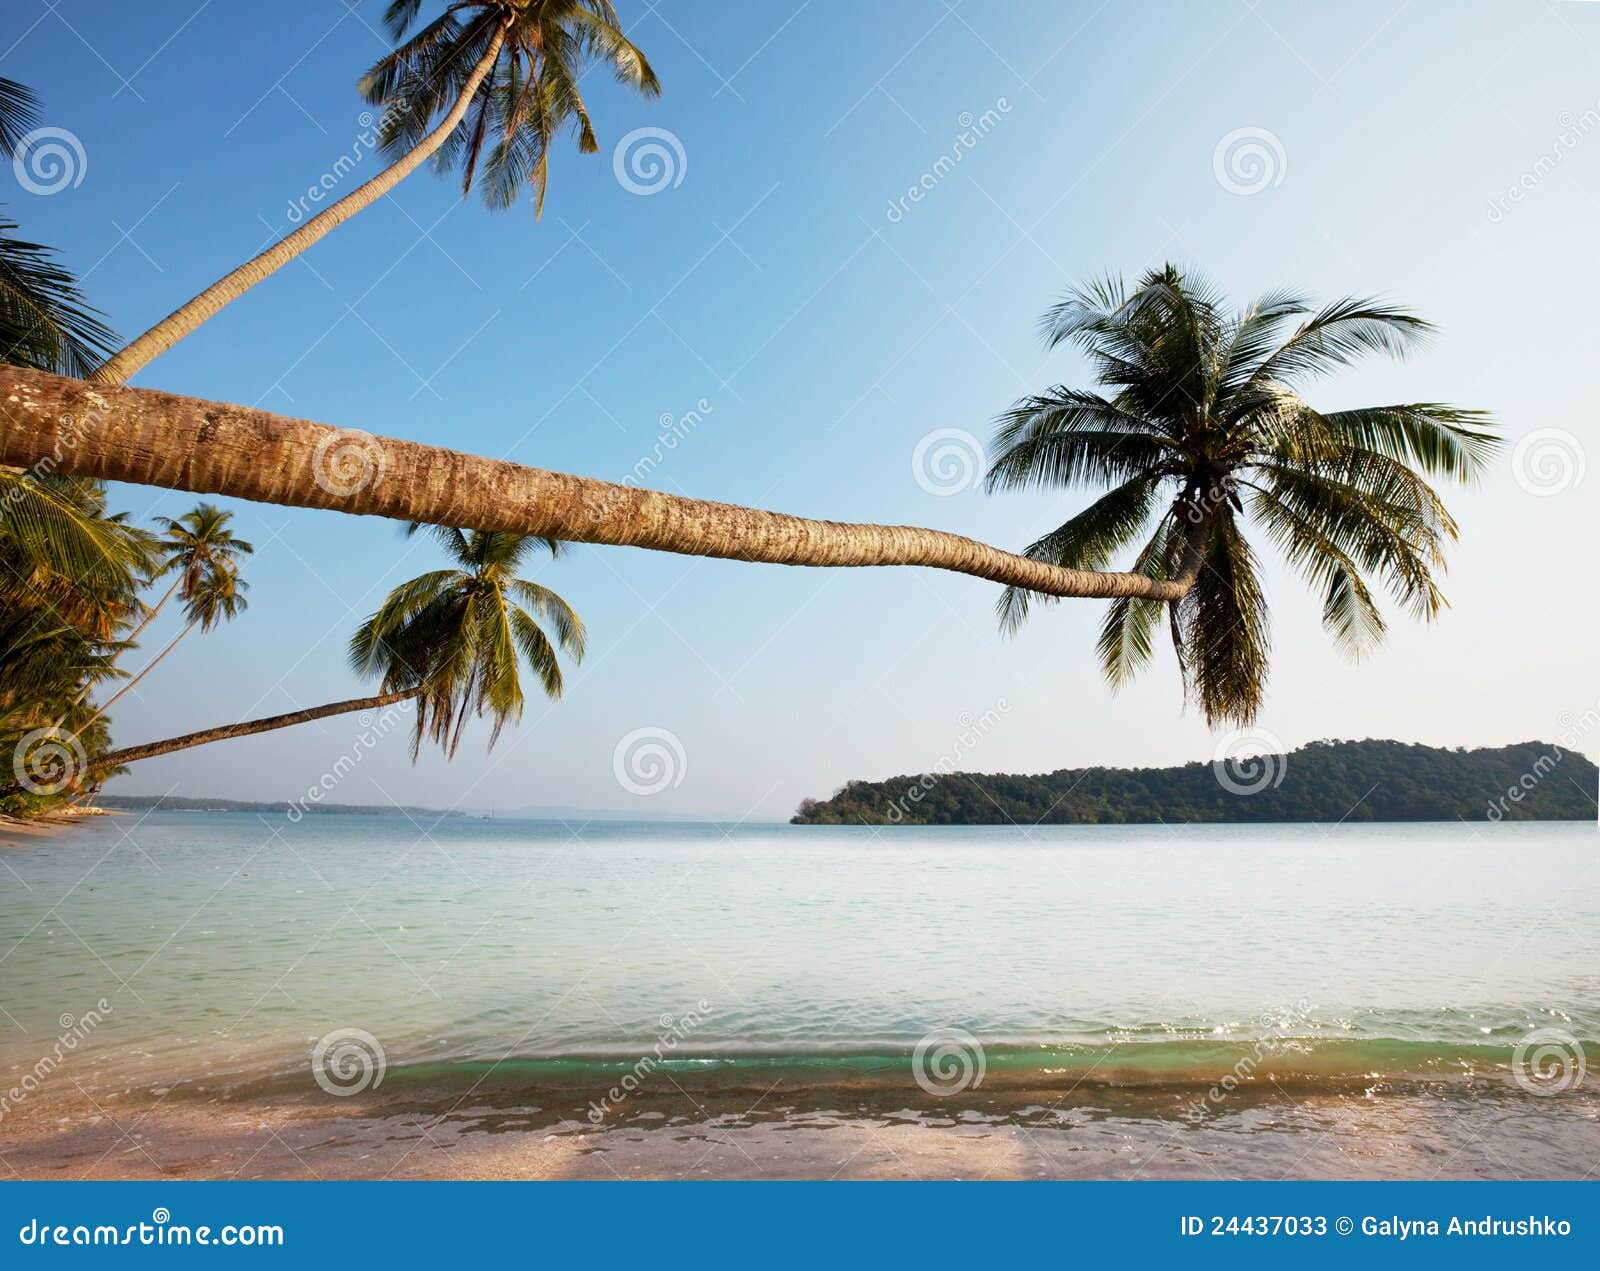 Andaman sea stock image. Image of paradise, destination - 24437033